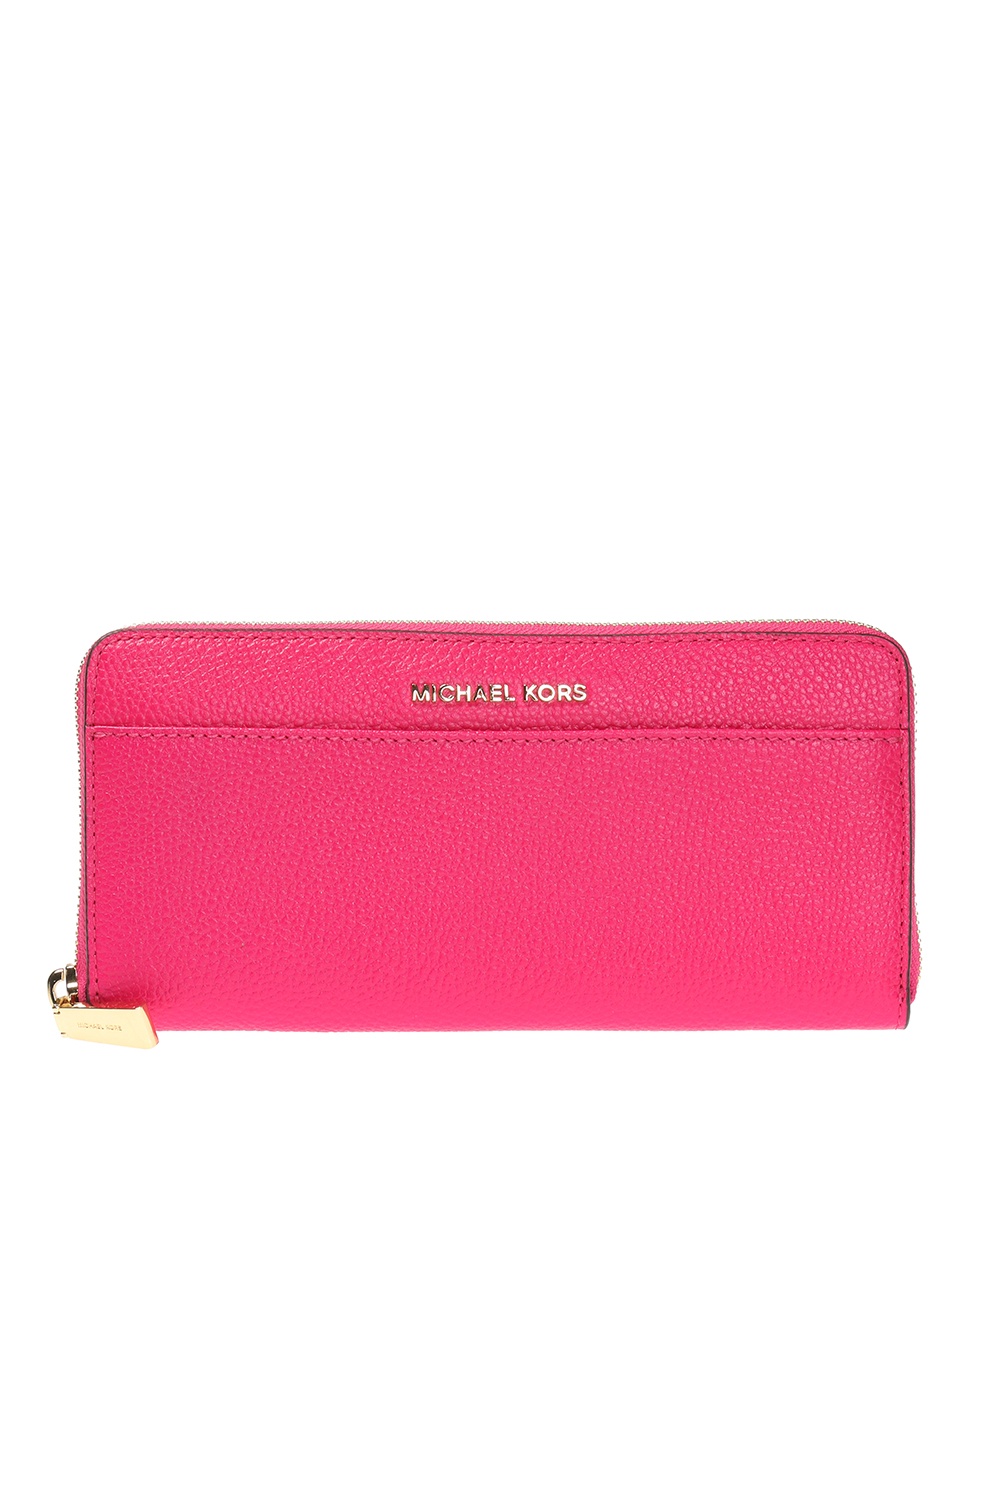 Pink Wallet with a logo Michael Michael Kors - Vitkac GB